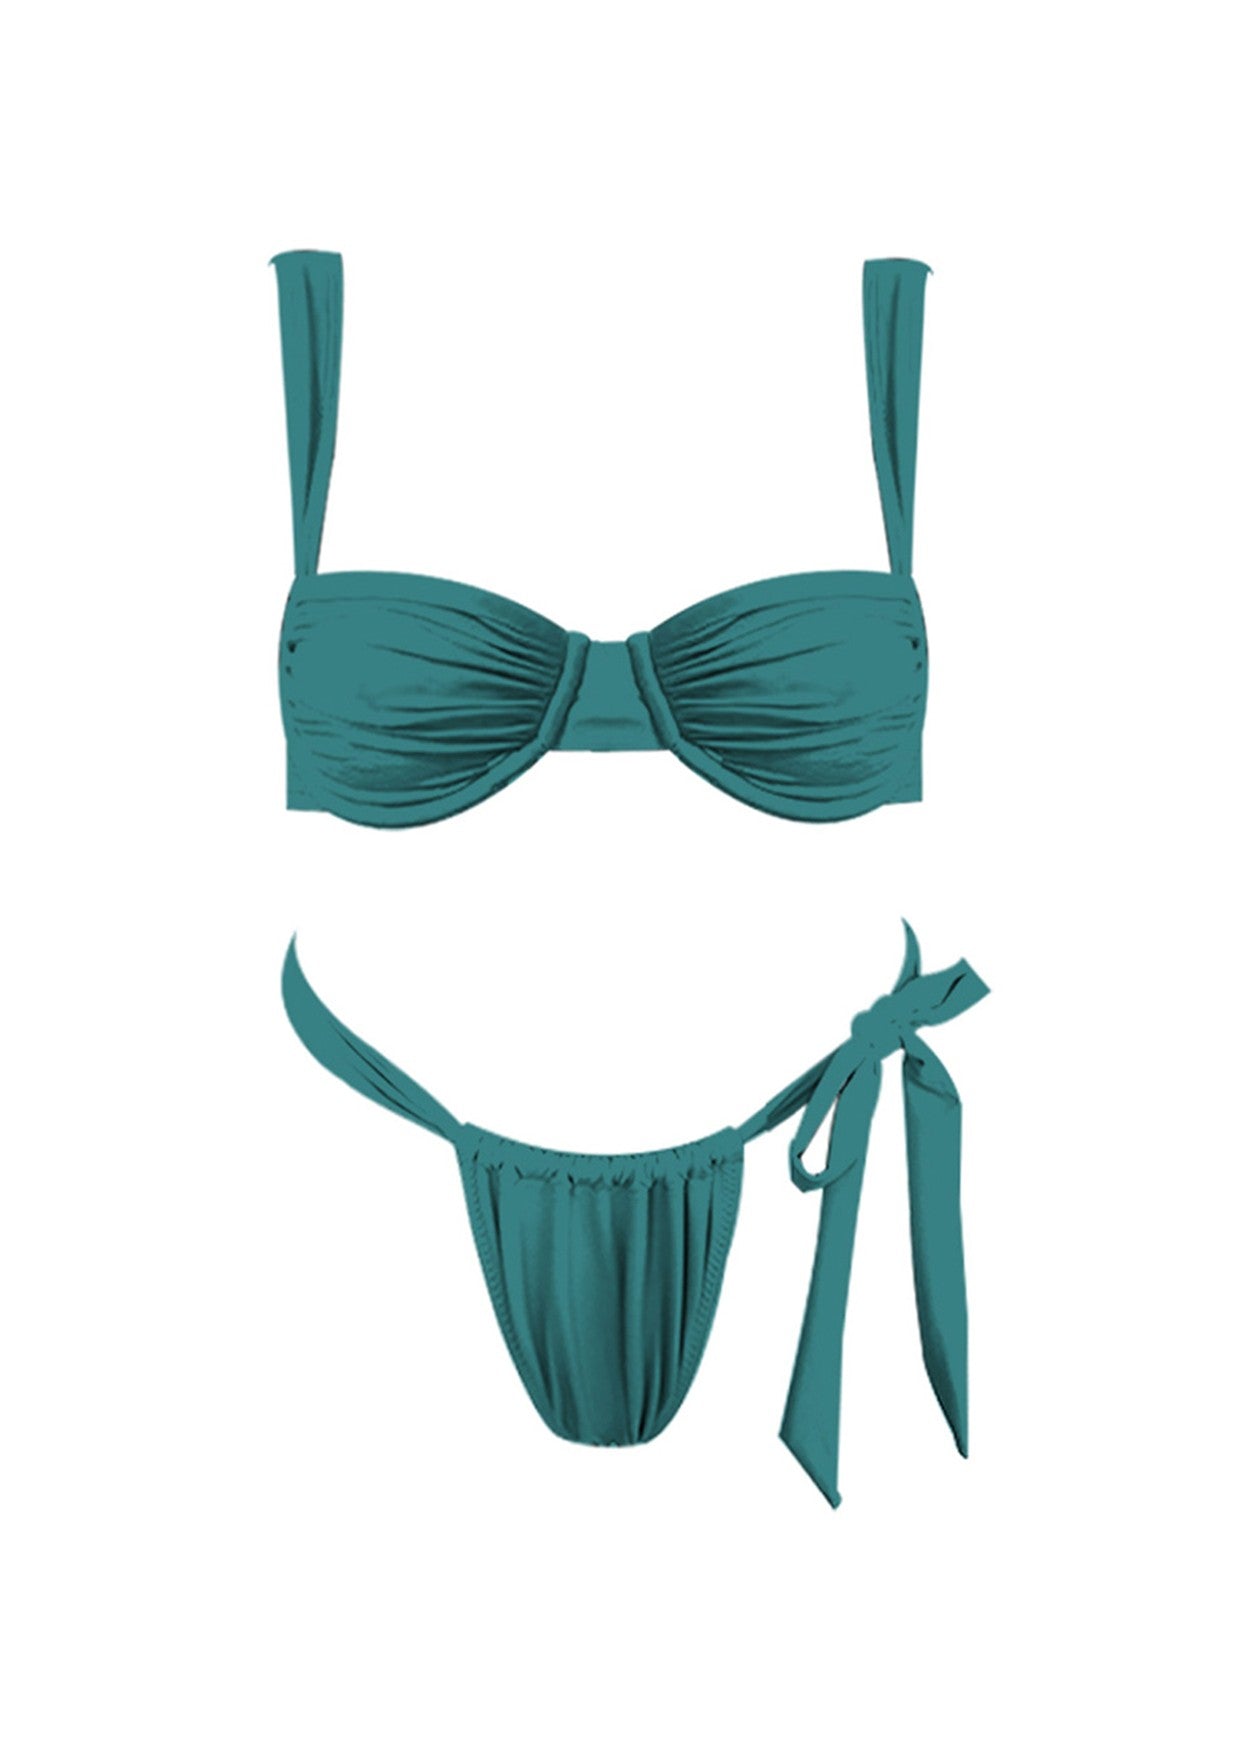 Paris Bikini Set - Eye-Catching Design for Beach or Pool Day